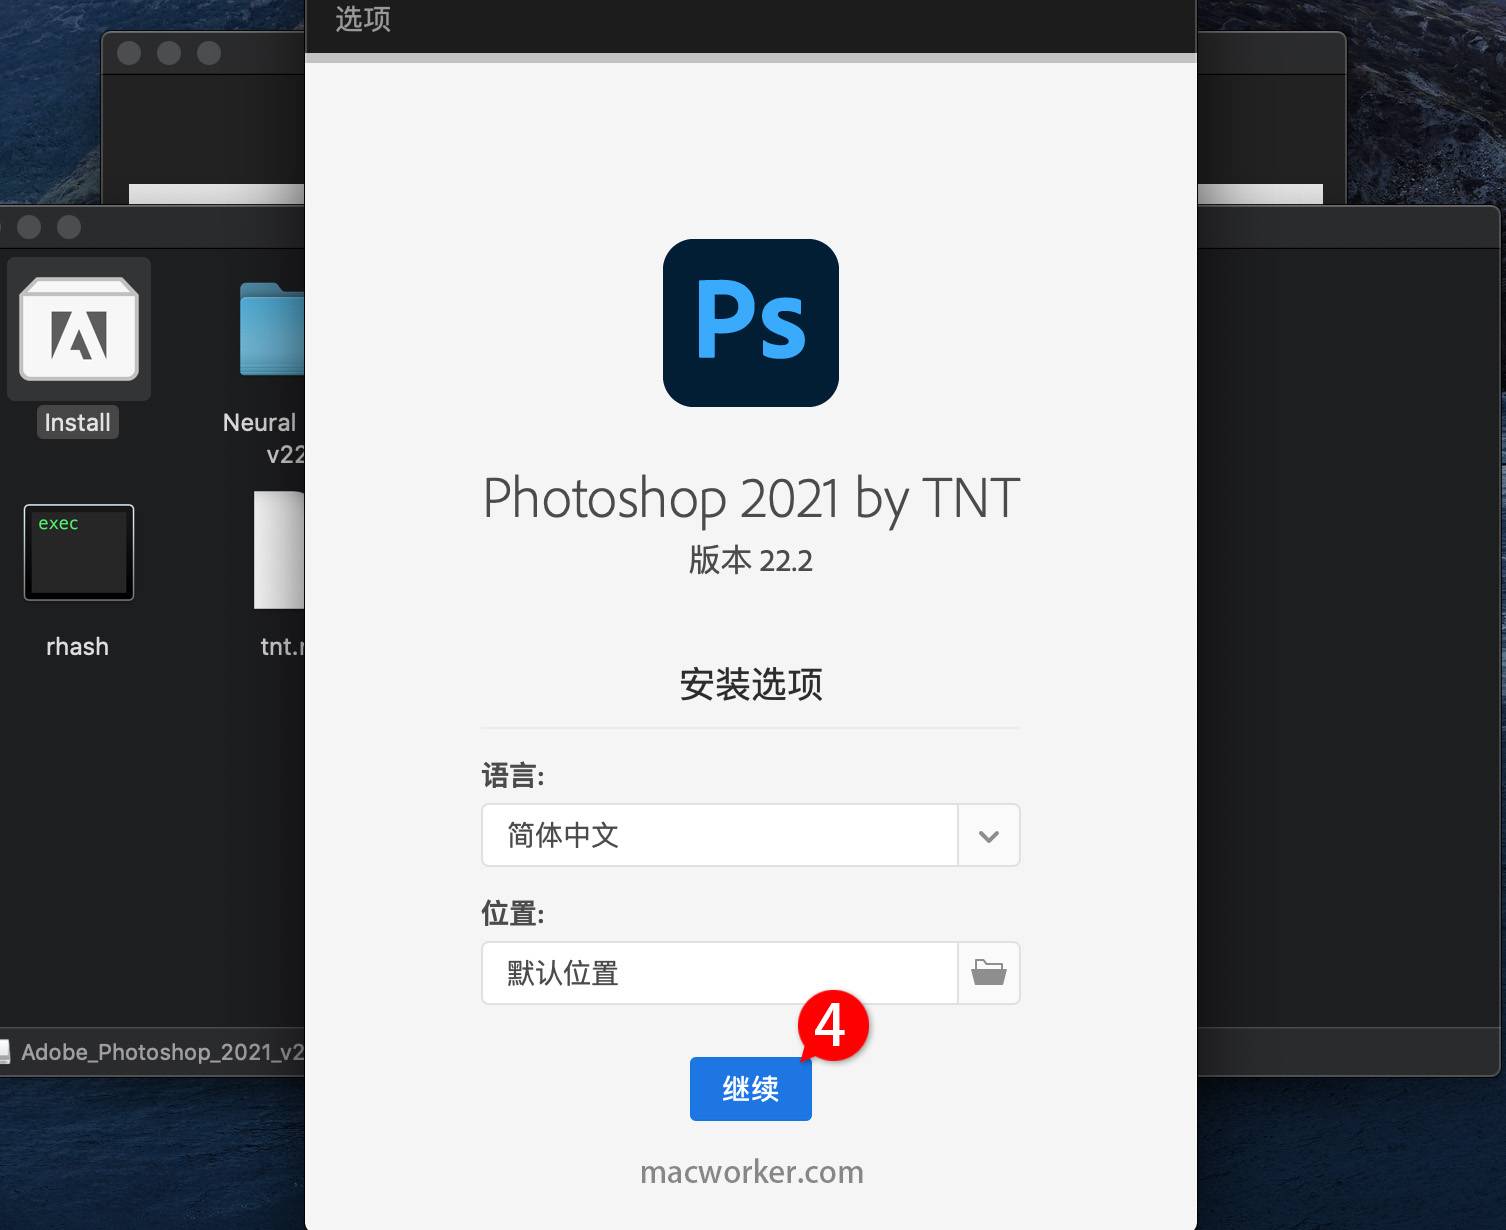 adobe photoshop 2021 for Mac 破解版无法使用神经滤镜的详细安装方法